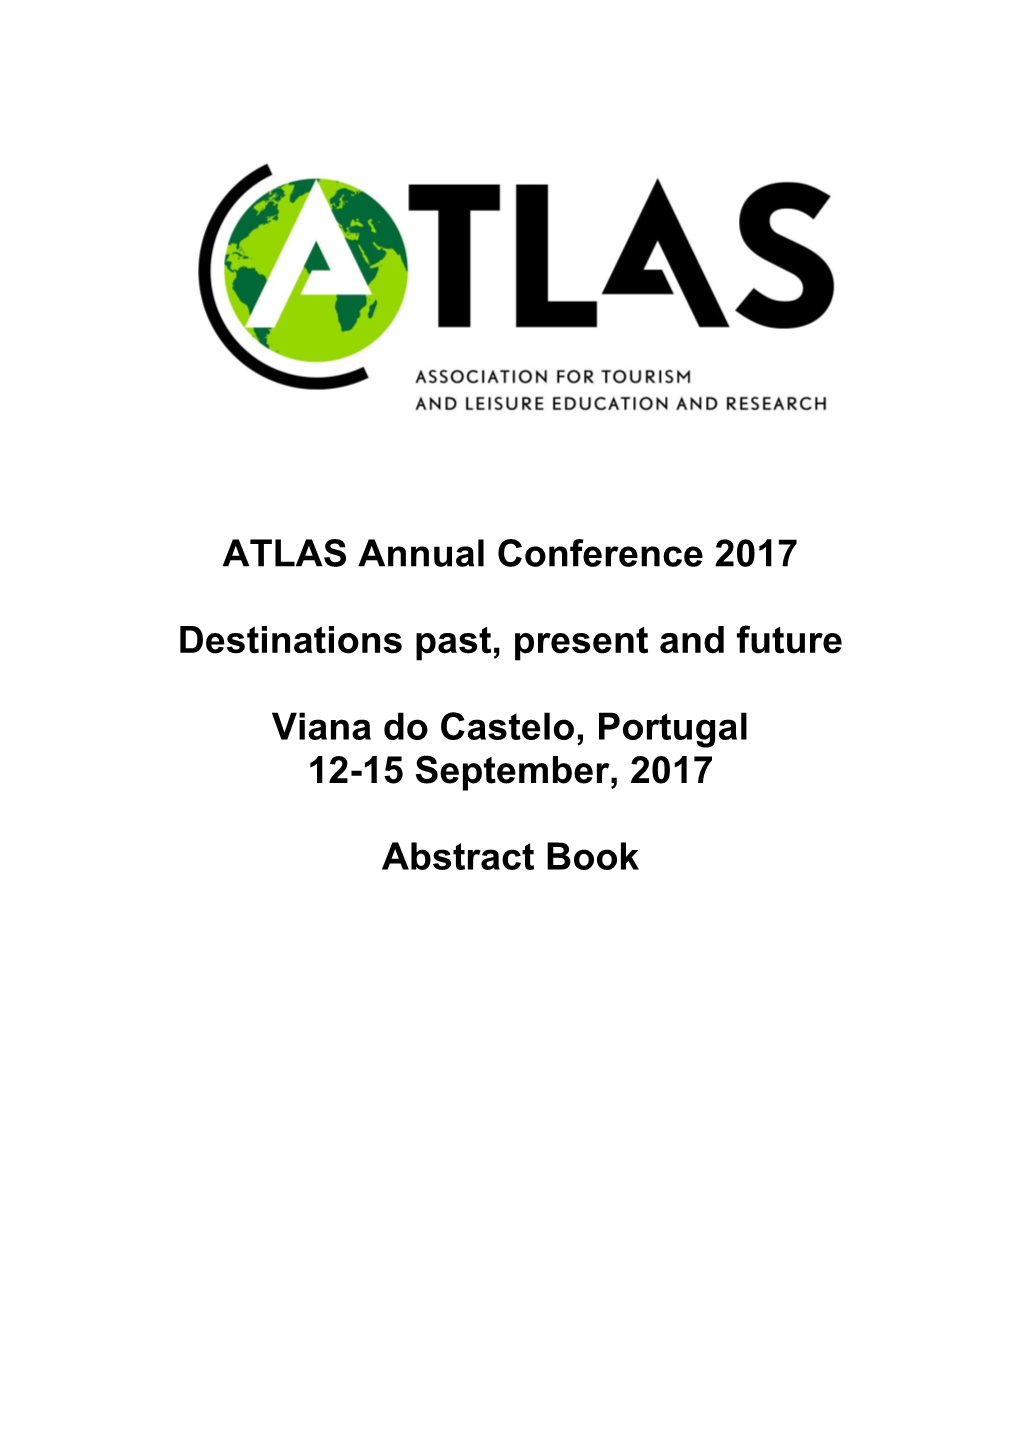 ATLAS Annual Conference 2017 Destinations Past, Present and Future Viana Do Castelo, Portugal 12-16 September, 2017